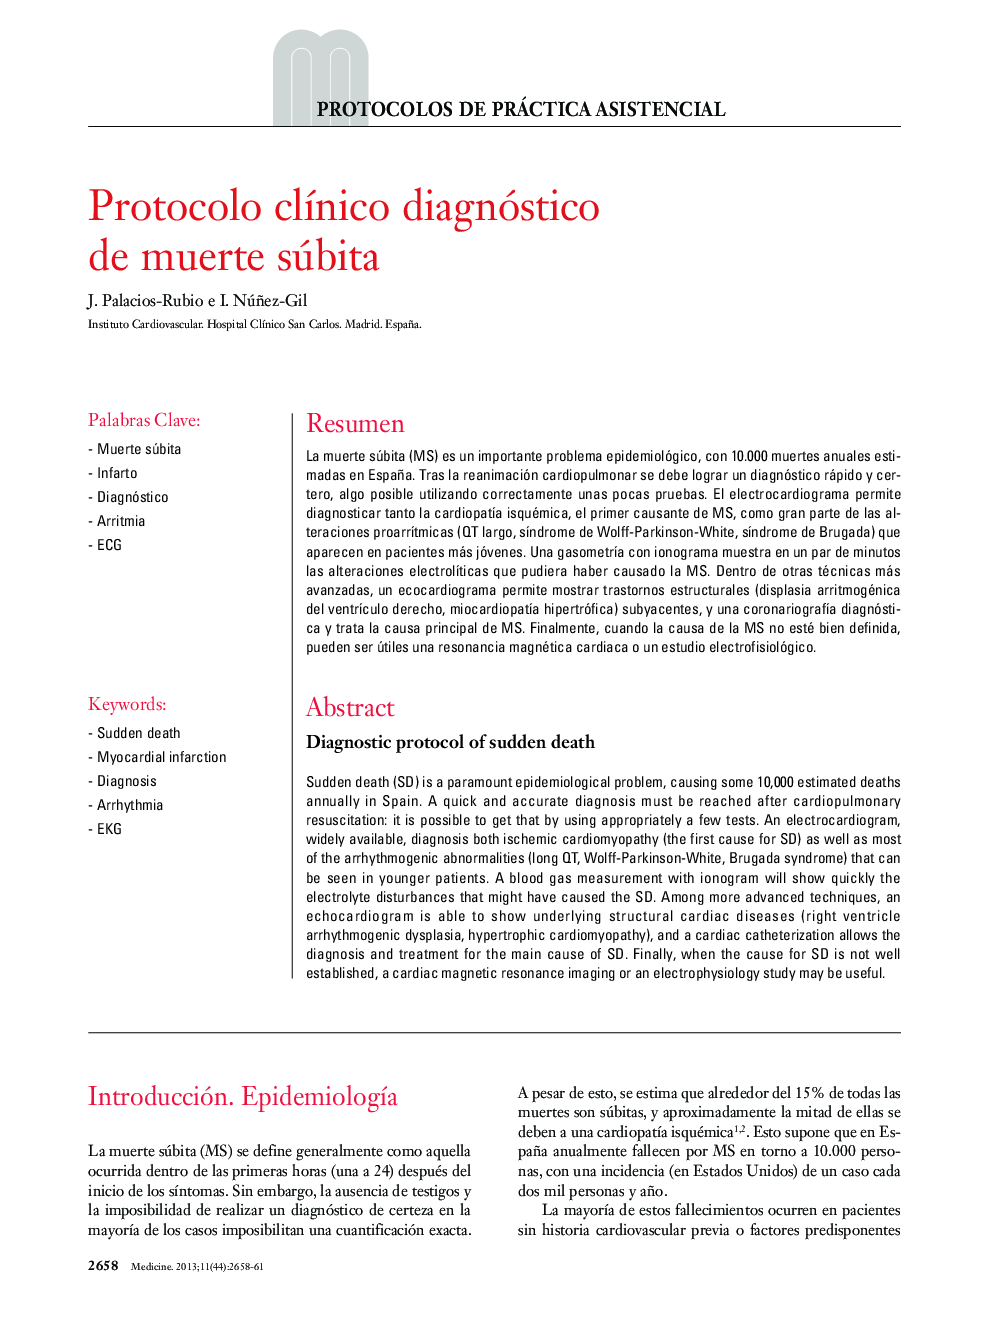 Protocolo clínico diagnóstico de muerte súbita